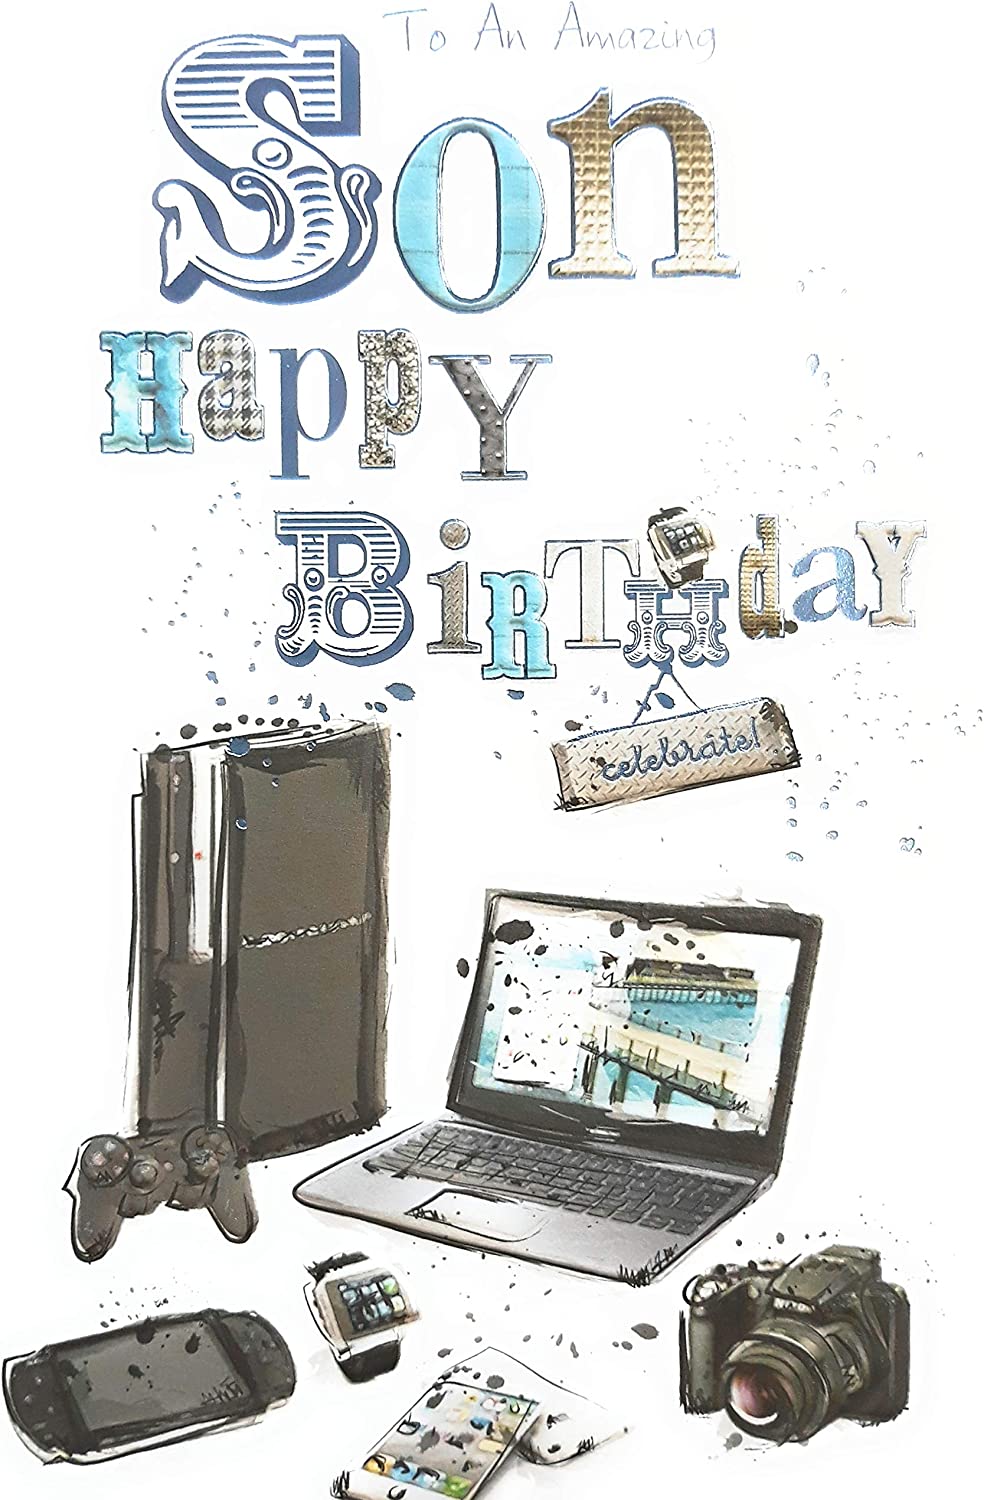 Son Birthday Card - Technology Mad